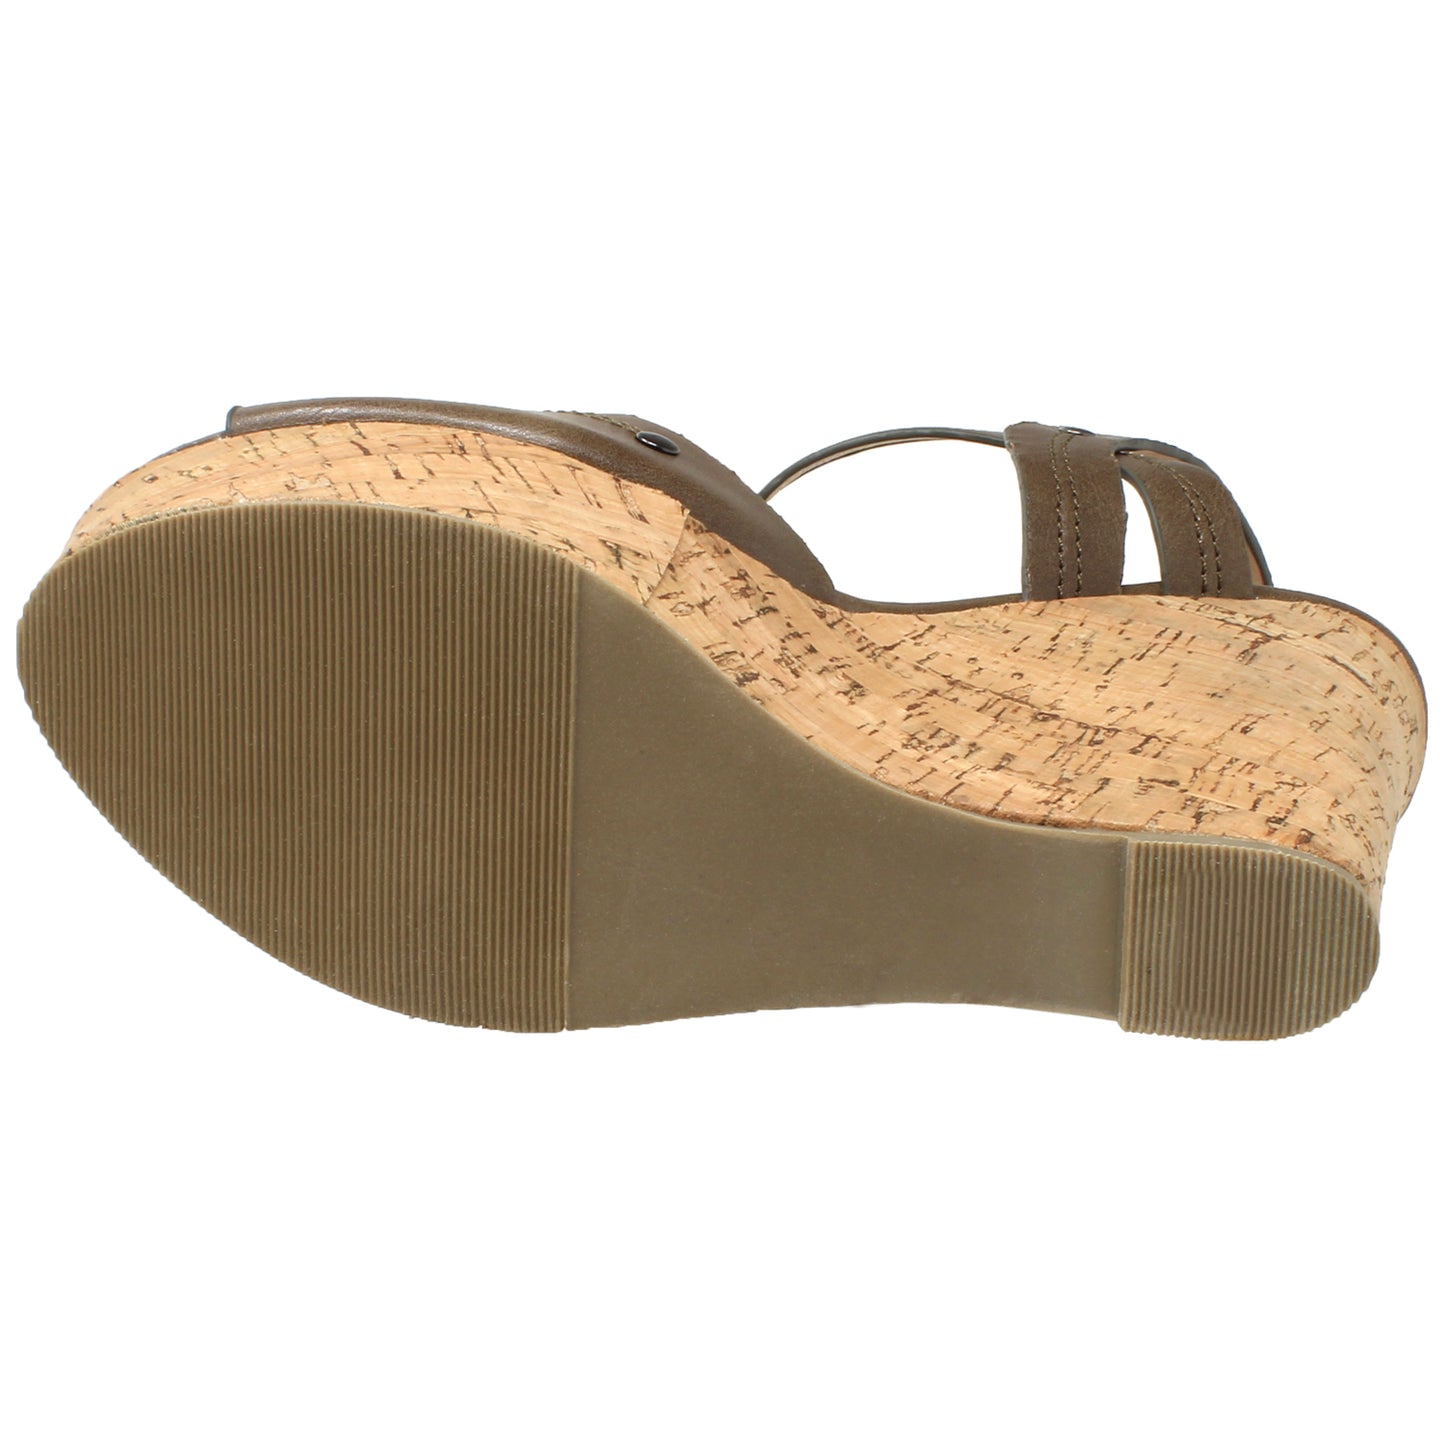 T-Strap Cork Wedge Sandal